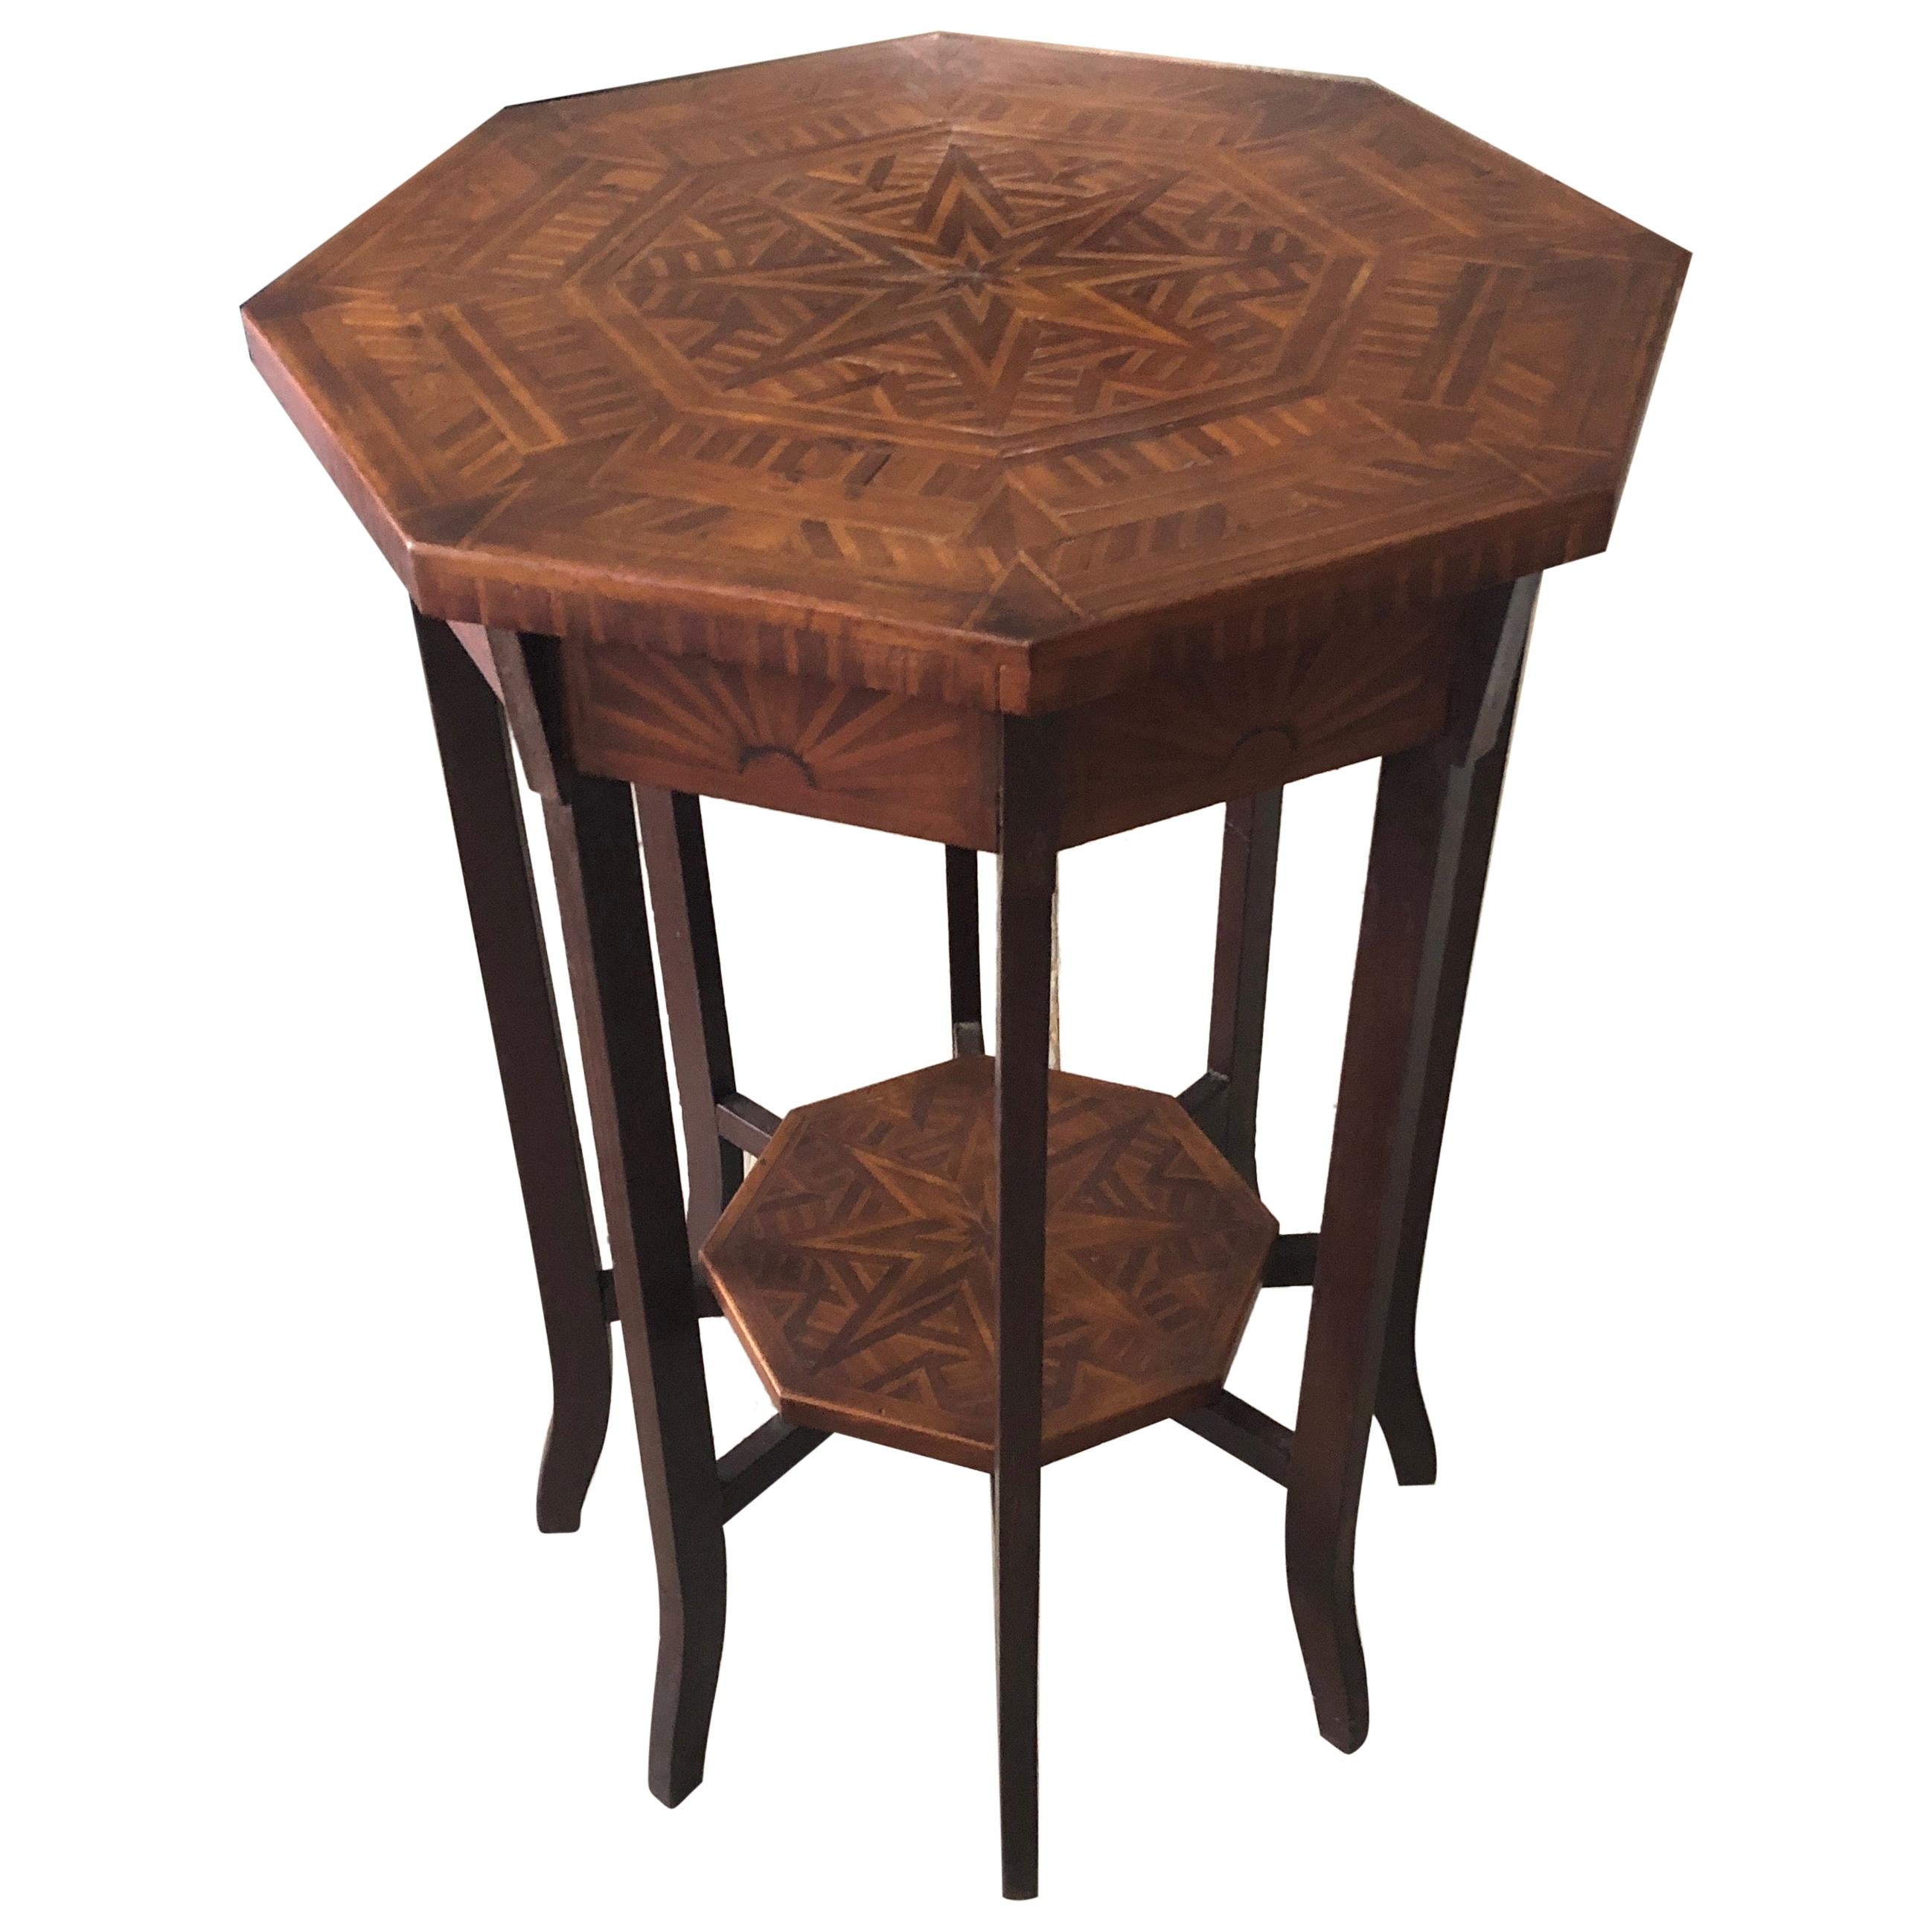 Elegant Antique Octagonal Side End Table with Inlaid Starburst Design